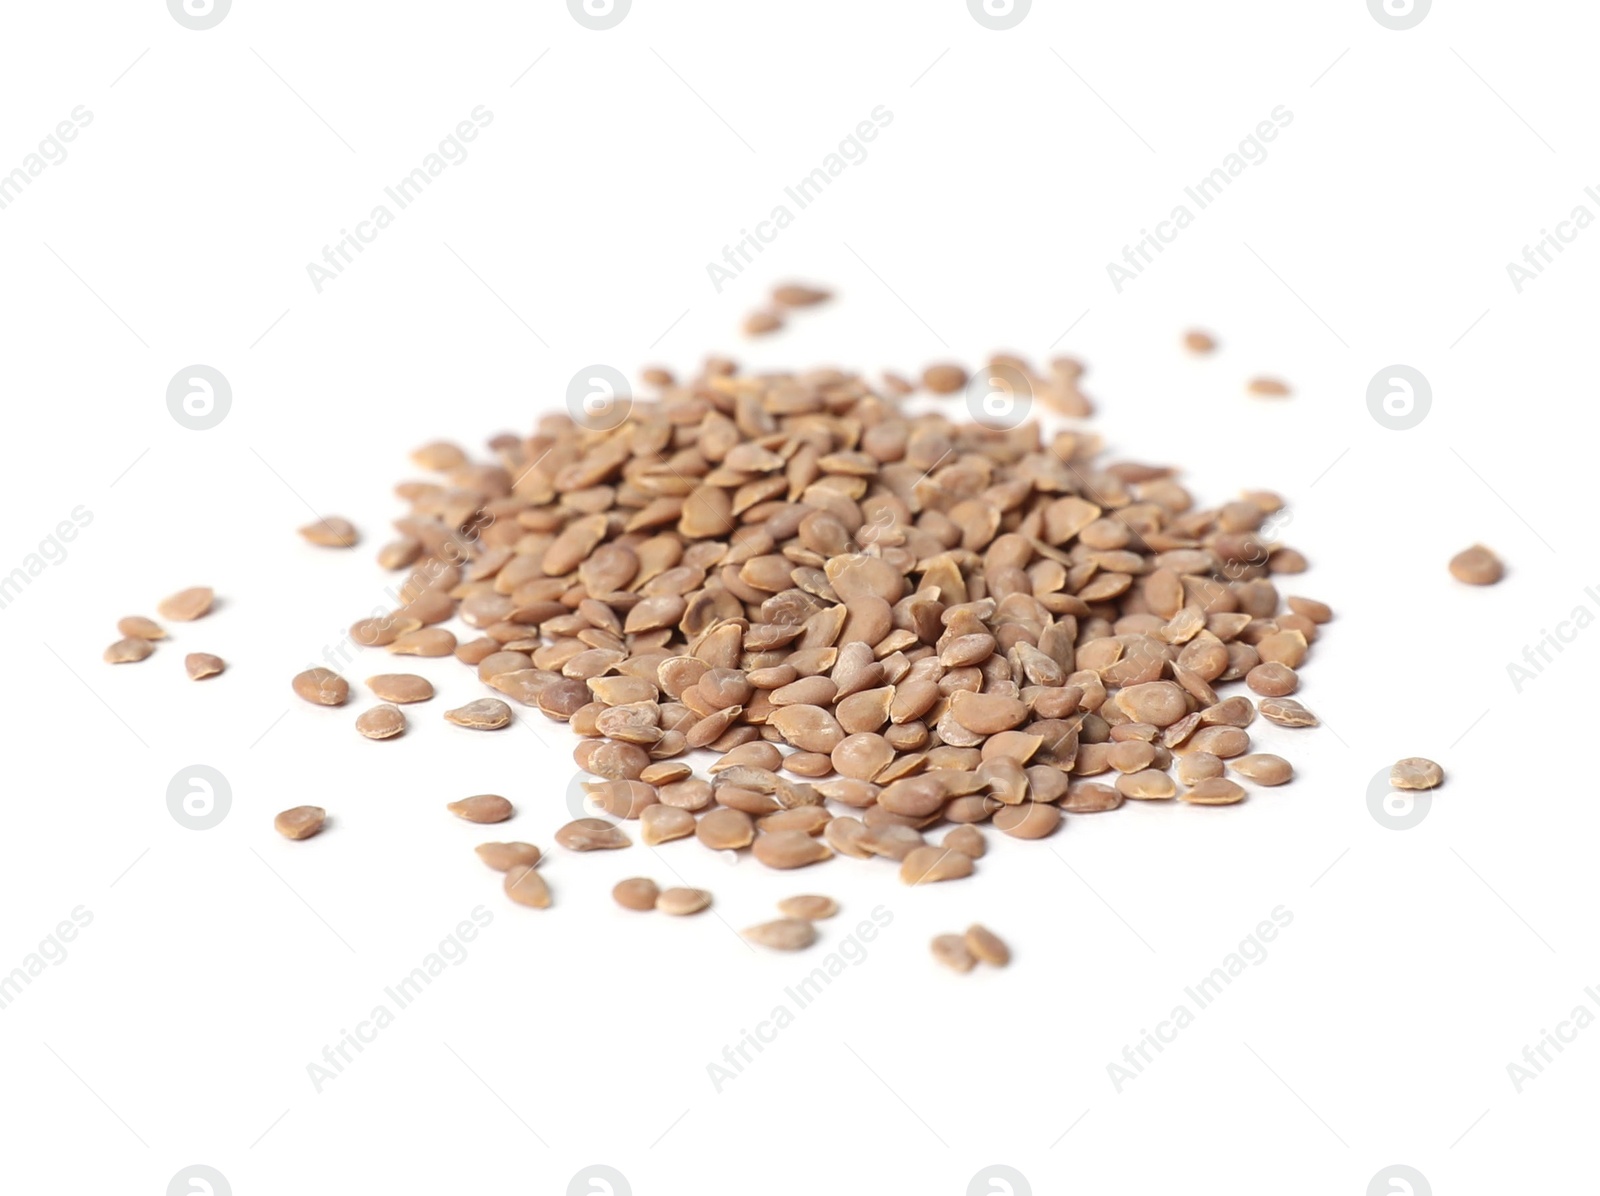 Photo of Pile of tomato seeds on white background